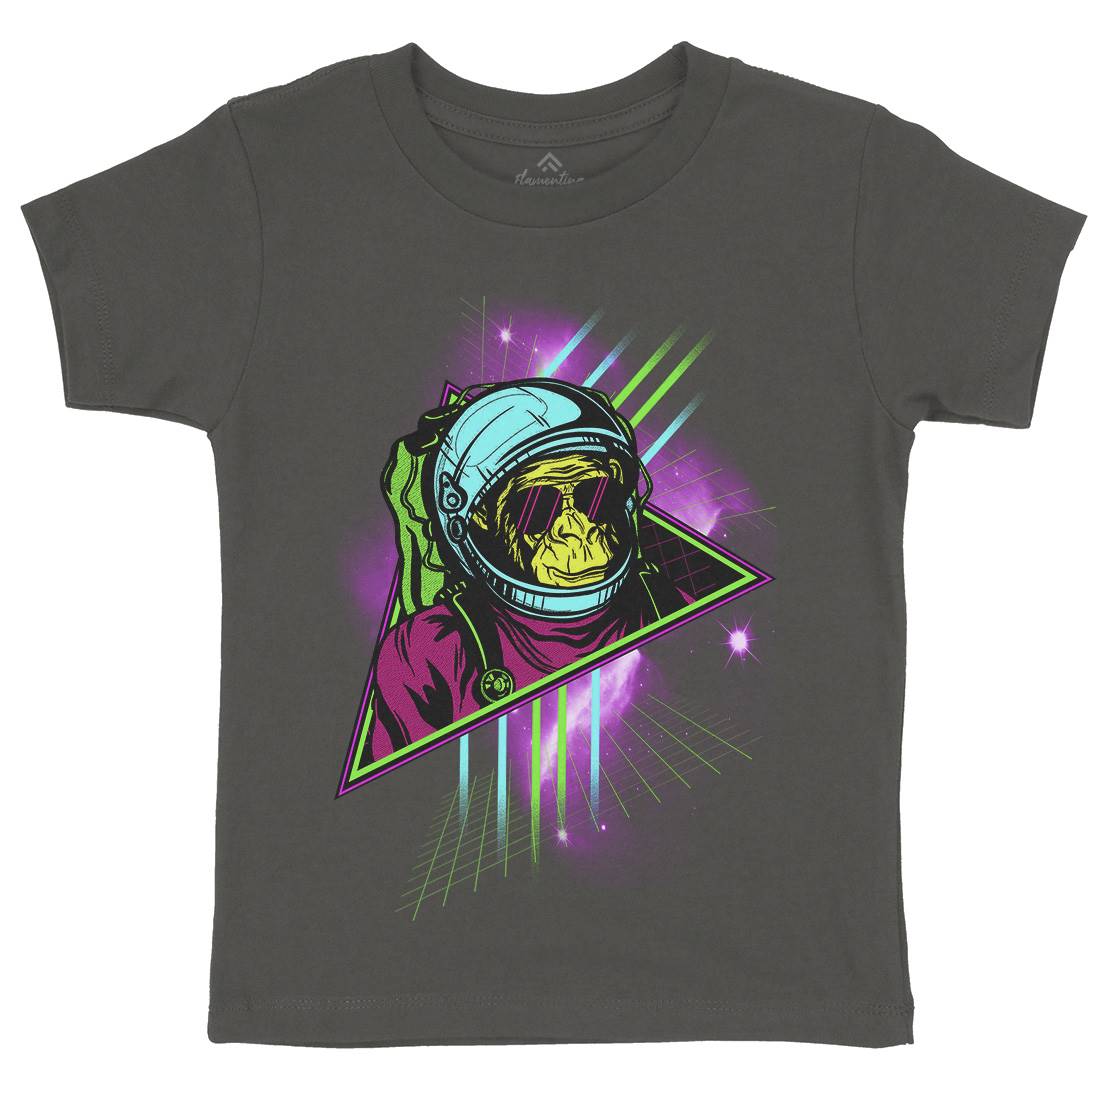 Monkey Kids Crew Neck T-Shirt Space D086